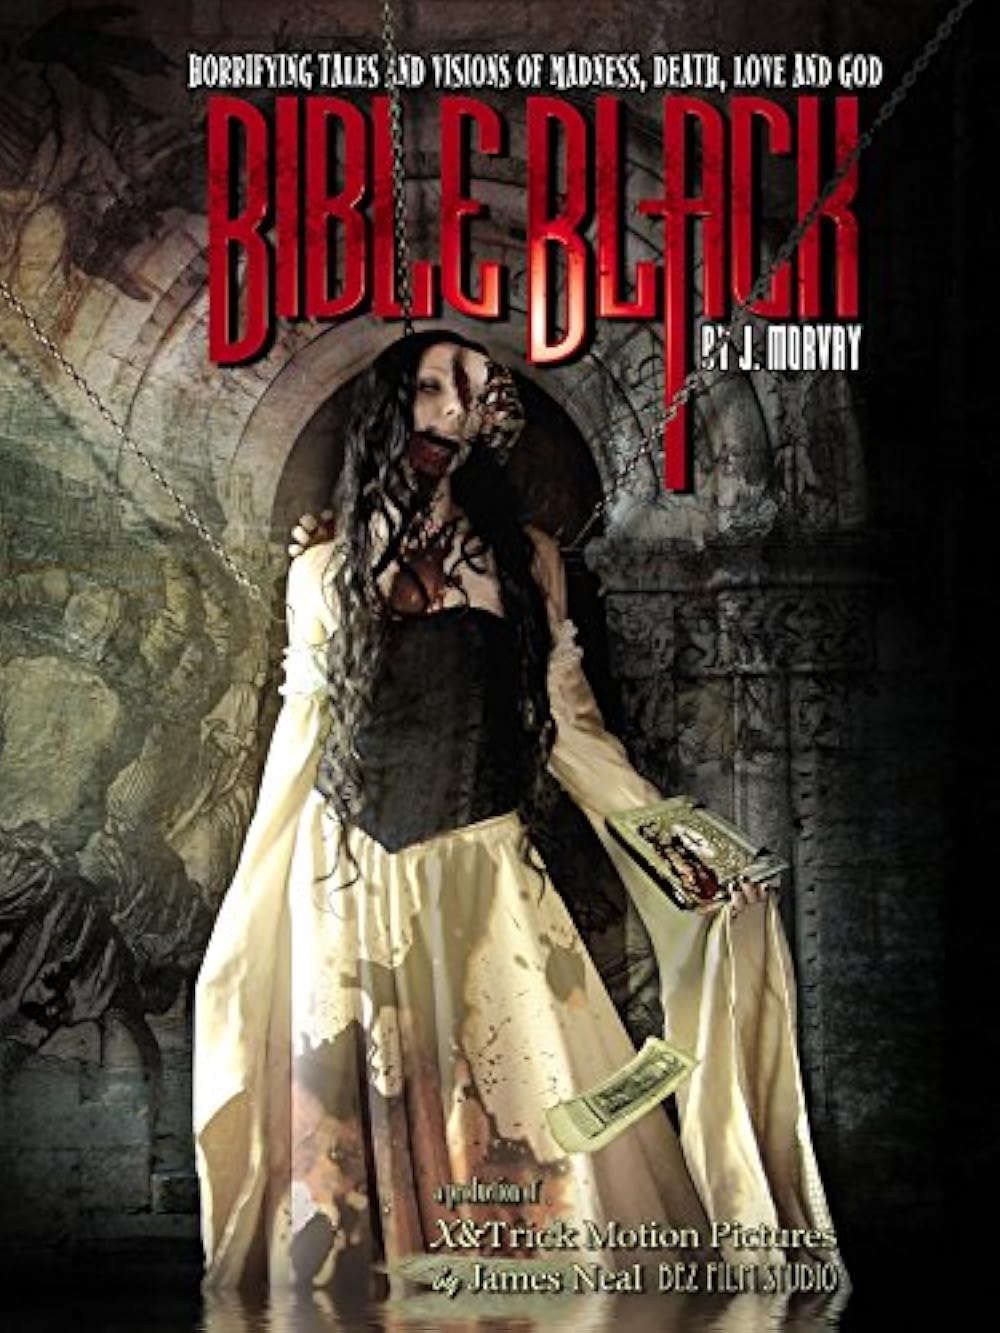 craig sliva share bible black full movie photos